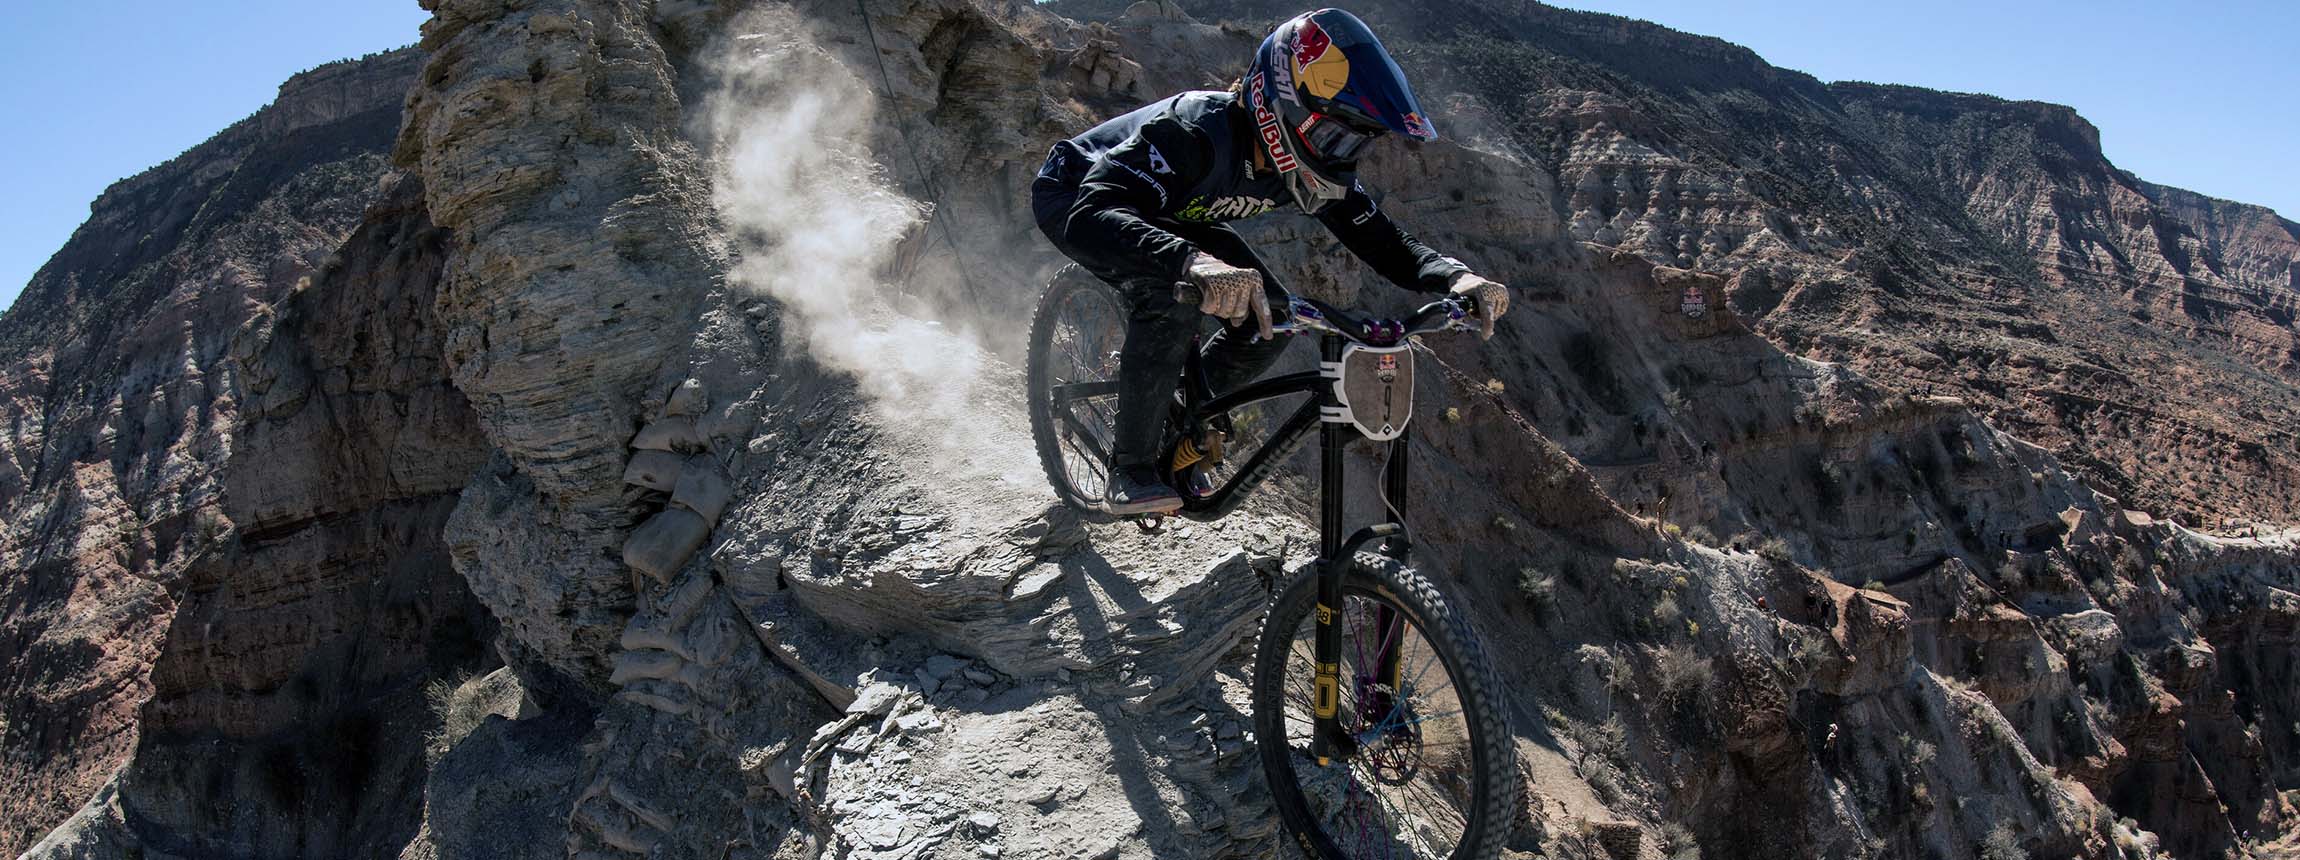 Szymon Godziek rides his bike at Red Bull Rampage in Virgin, Utah, USA on 18 October, 2022.